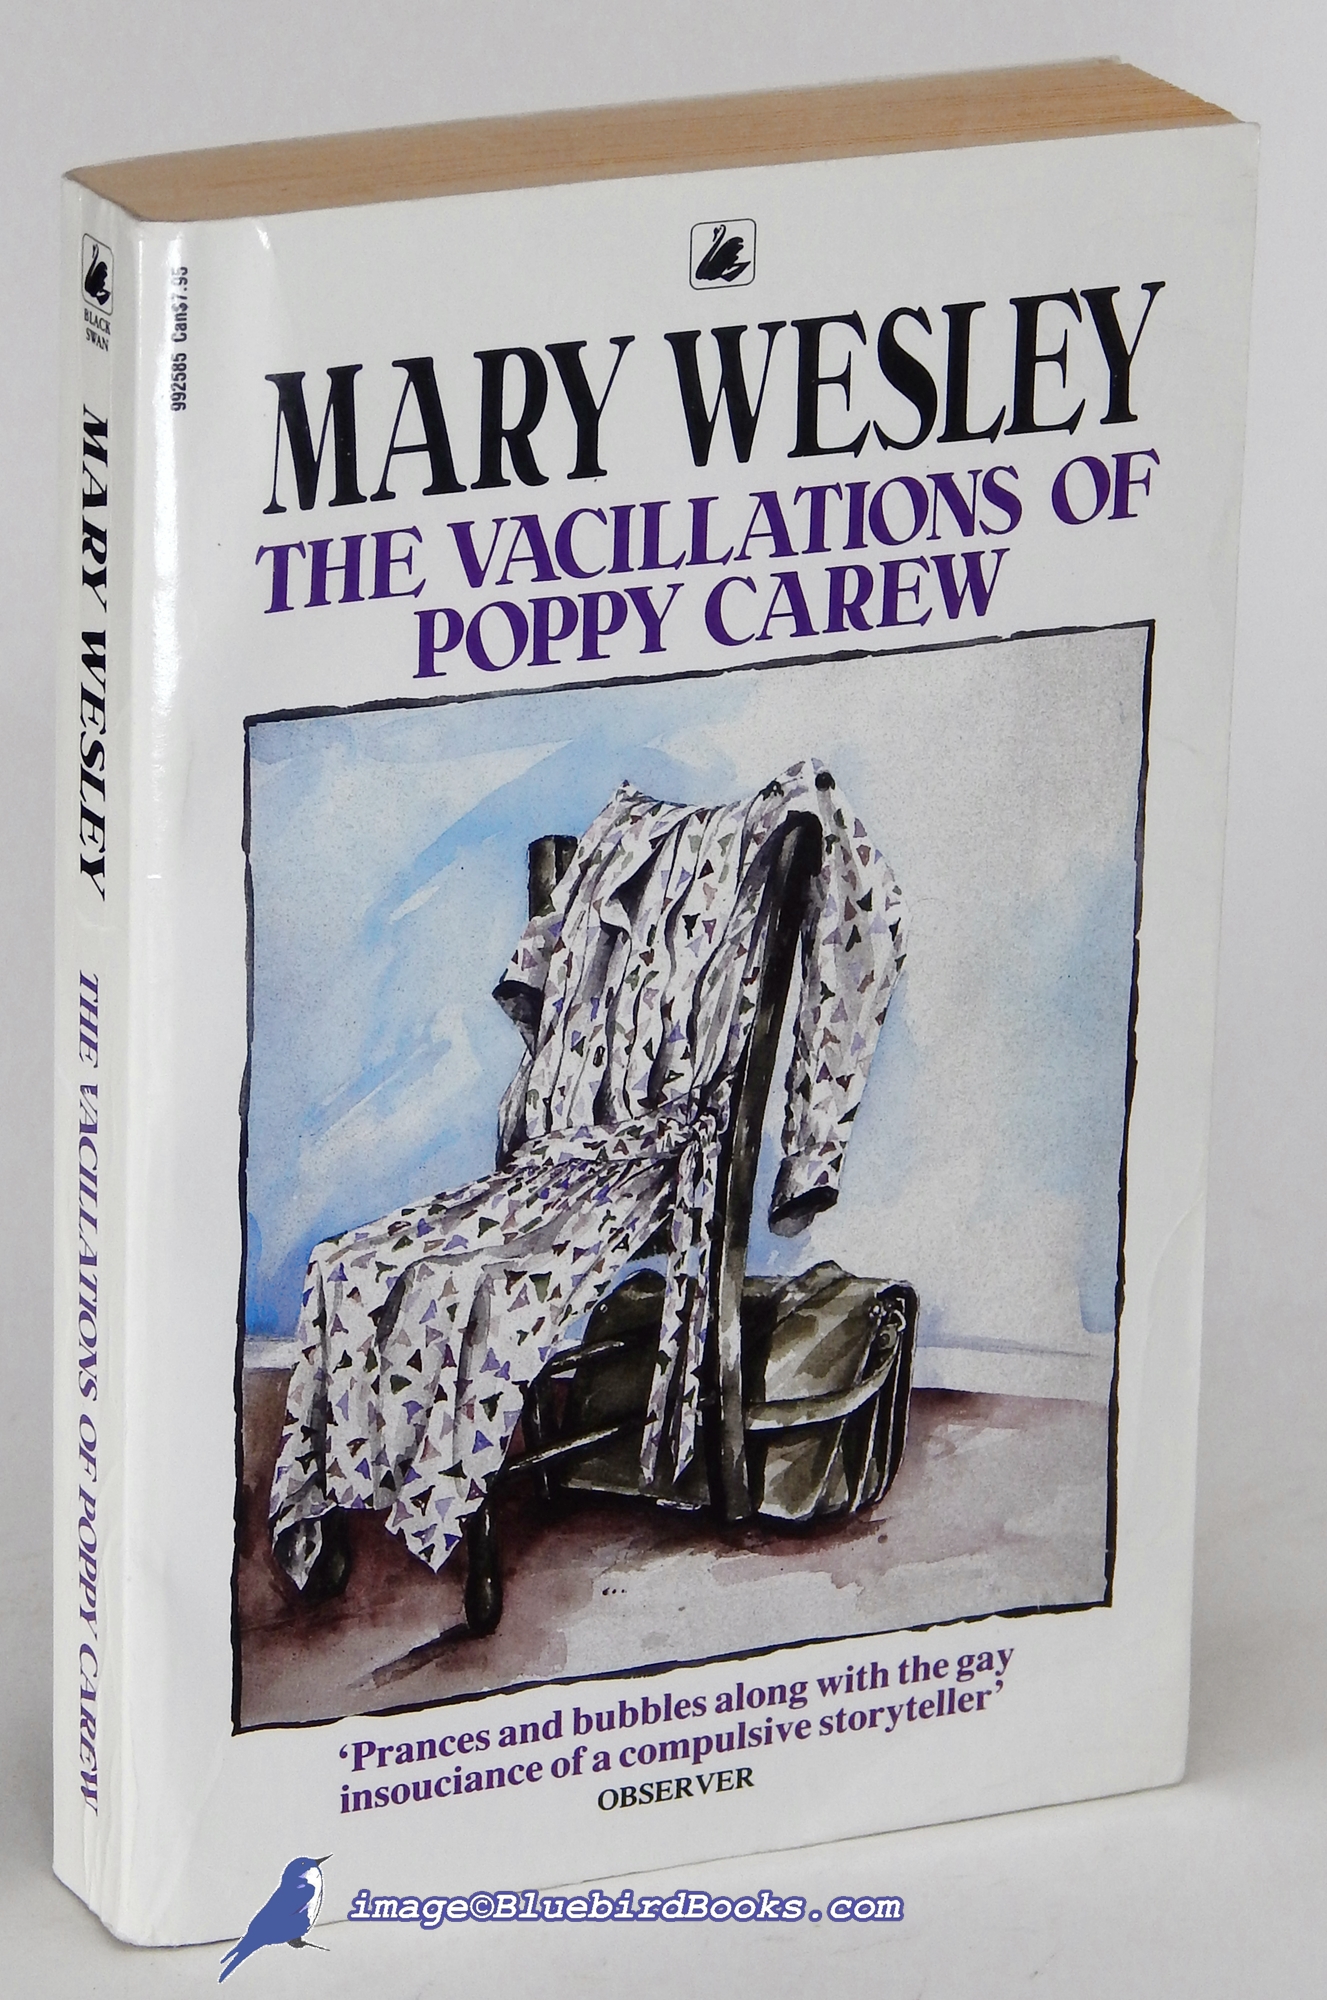 WESLEY, MARY - The Vacillations of Poppy Carew